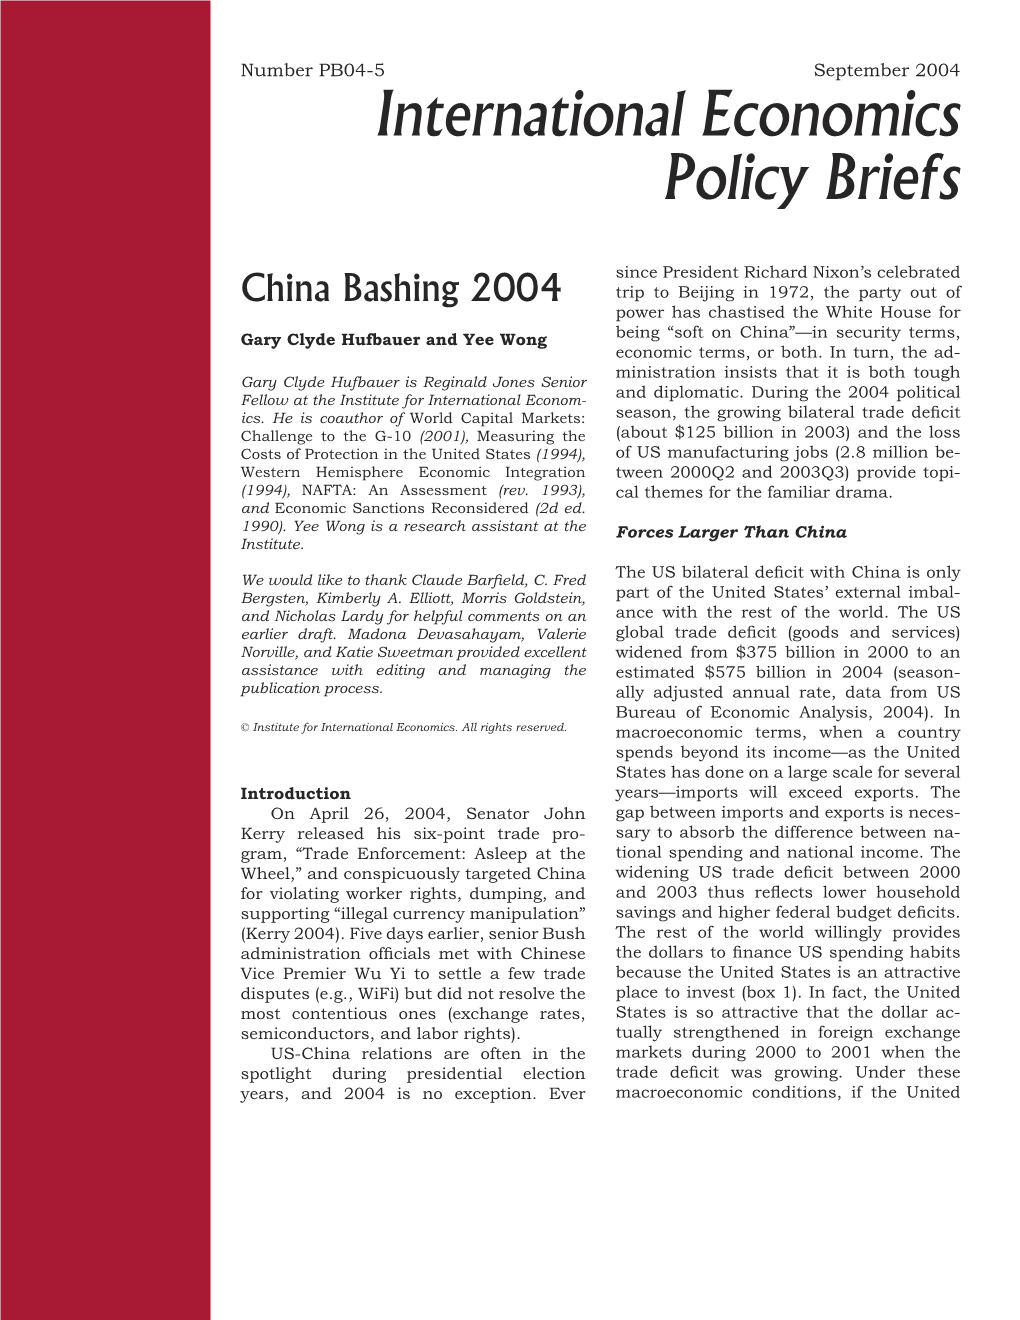 China Bashing 2004